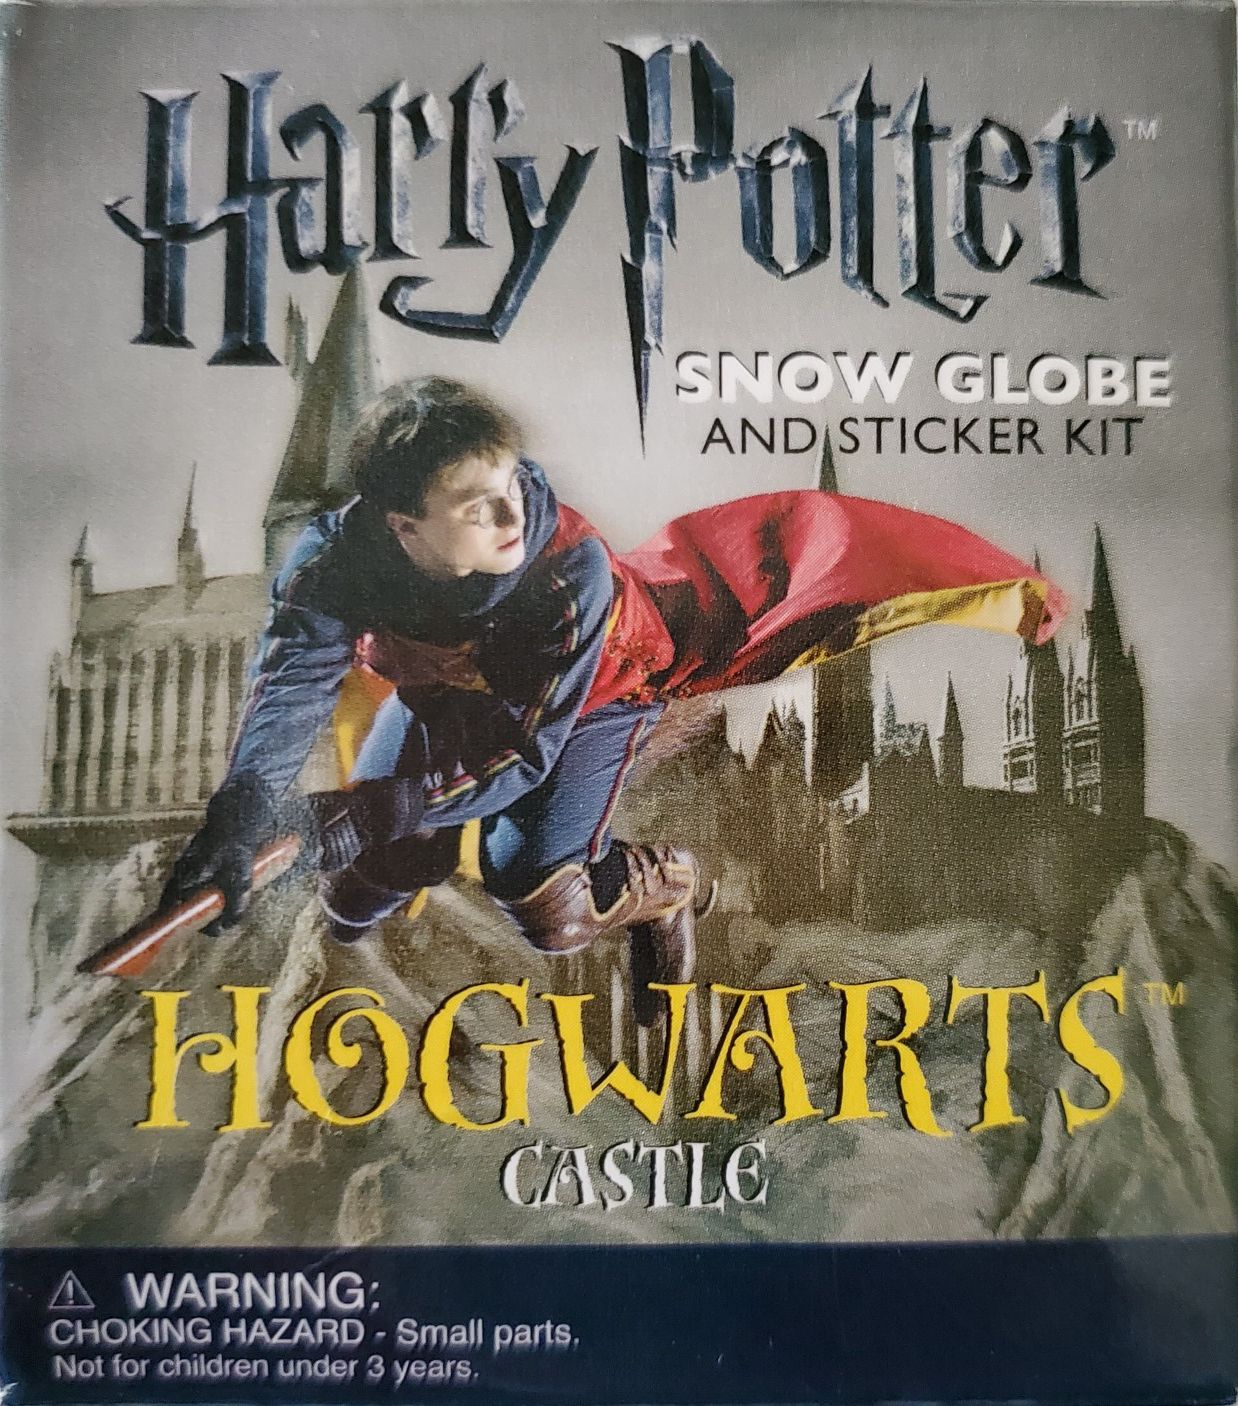 Harry Potter Hogwarts Castle snow globe